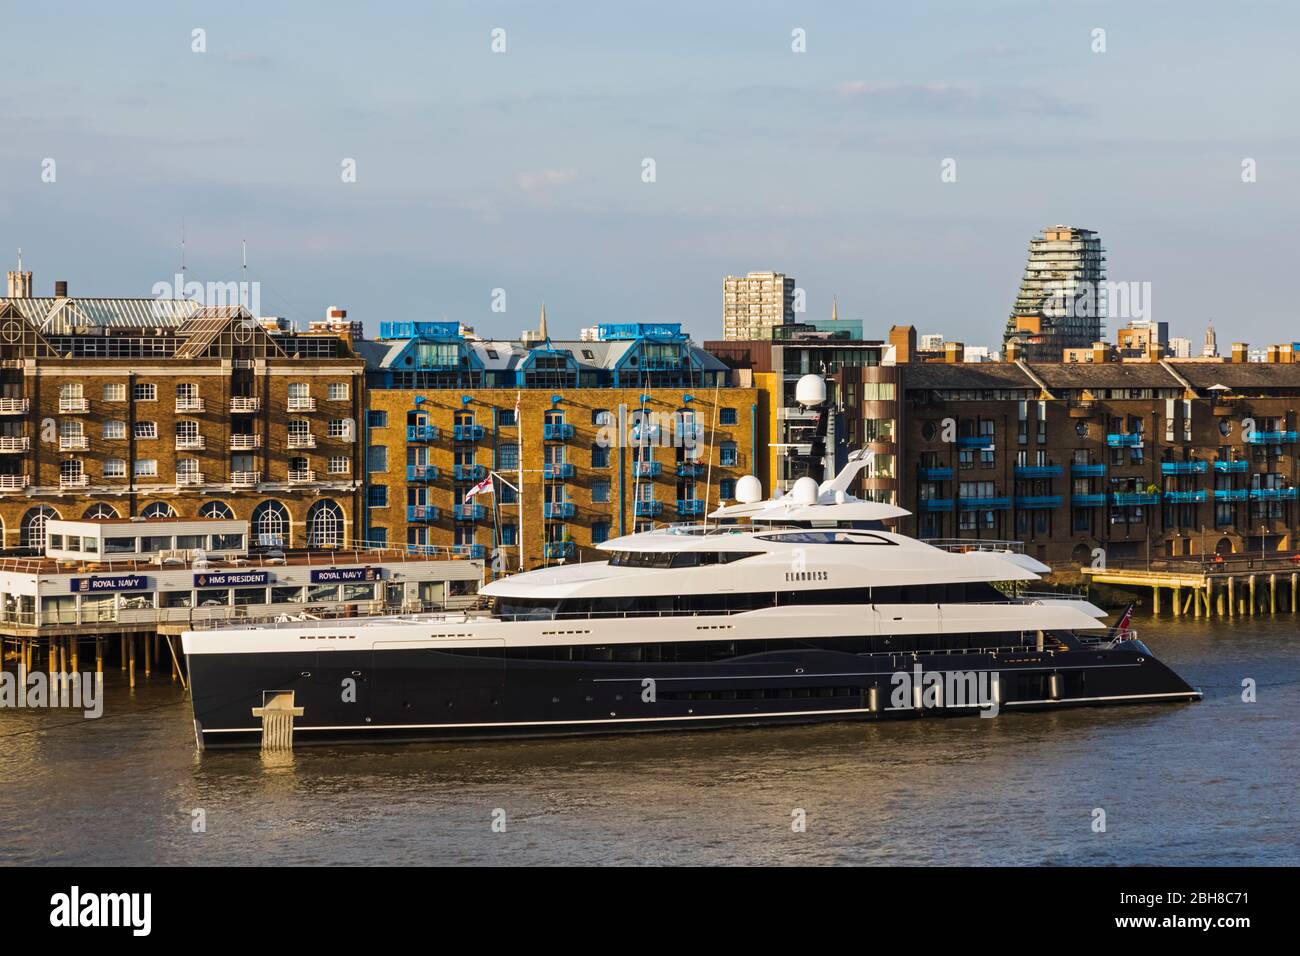 England, London, Luxury Motor Yacht Elandess Owned by Businessman Lloyd Dorfman at Anchor in The Thames near Tower Bridge Stock Photo